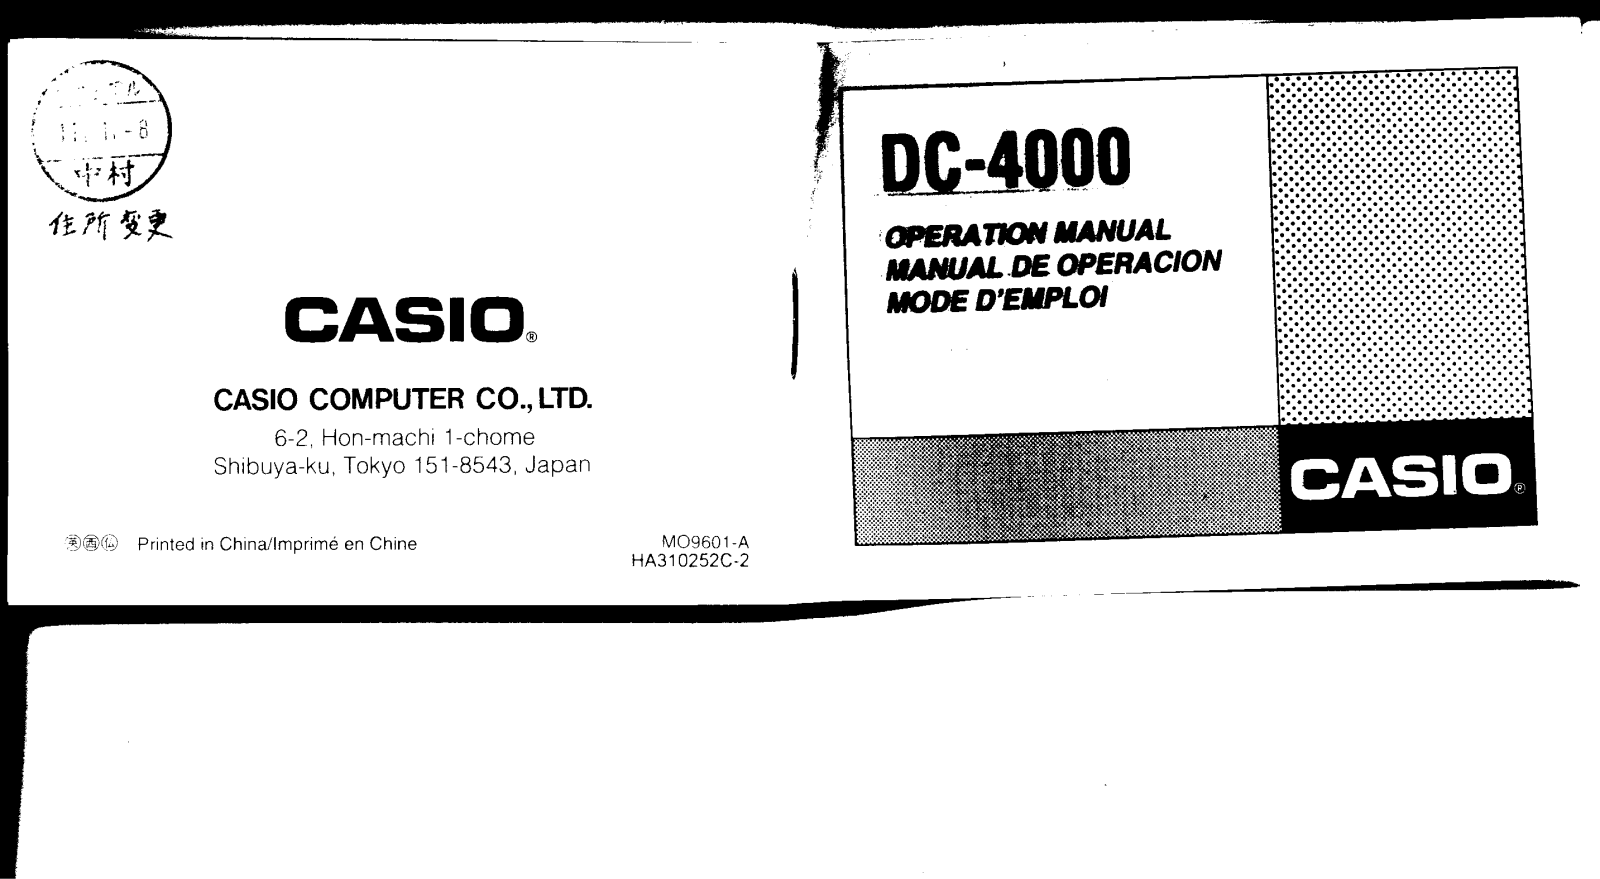 CASIO DC-4000 User Manual